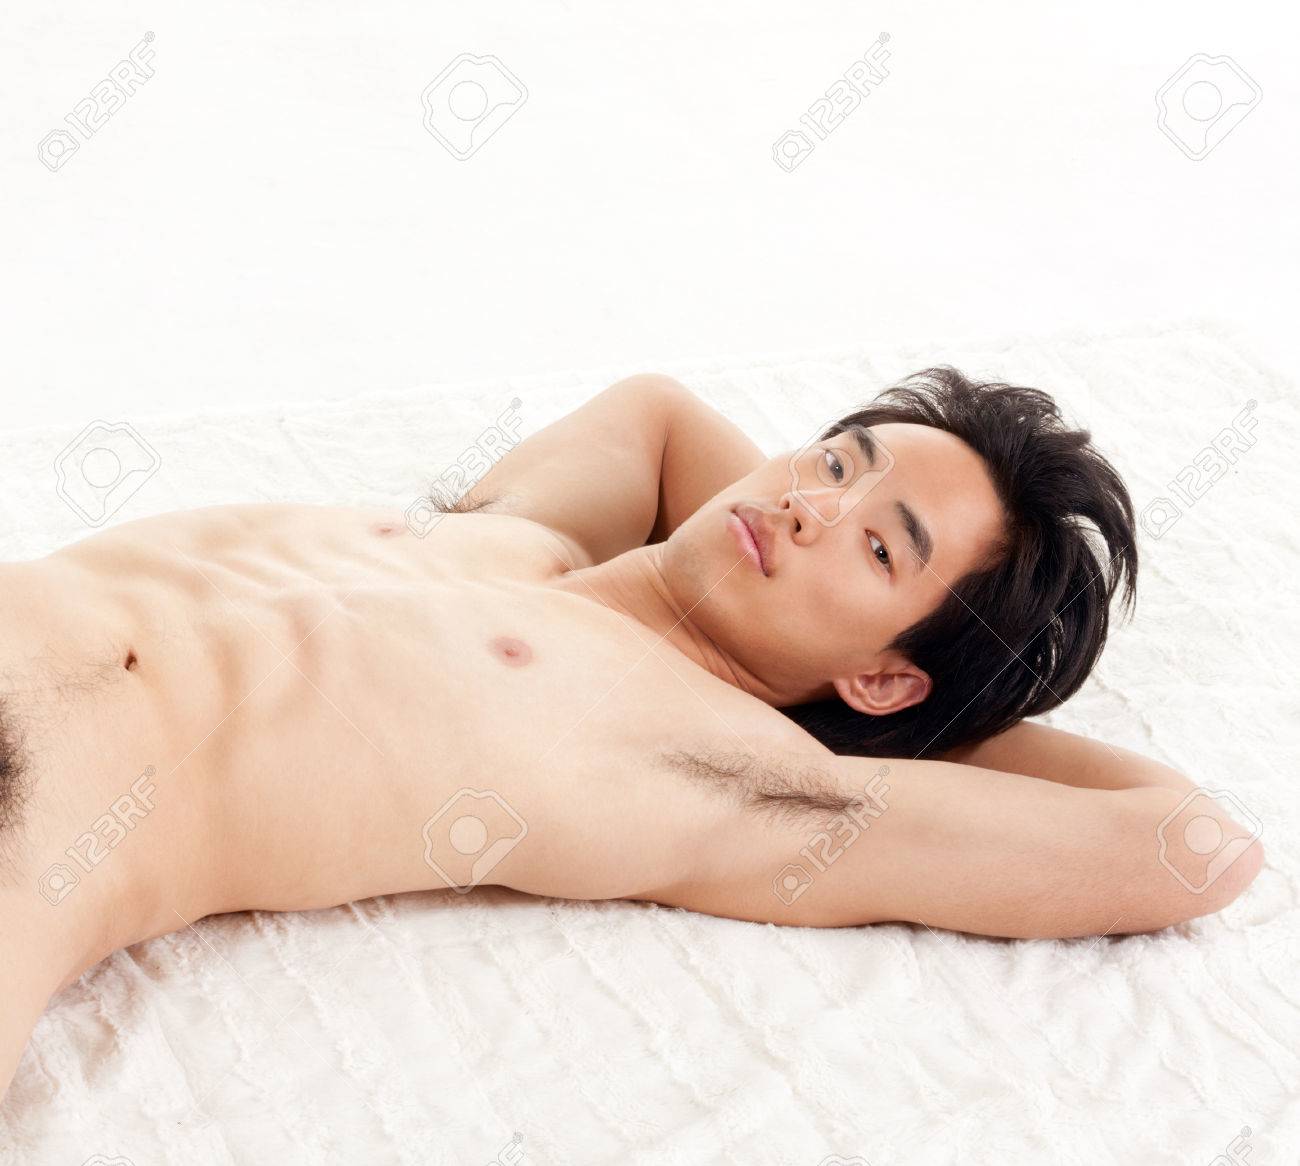 young naked man asian